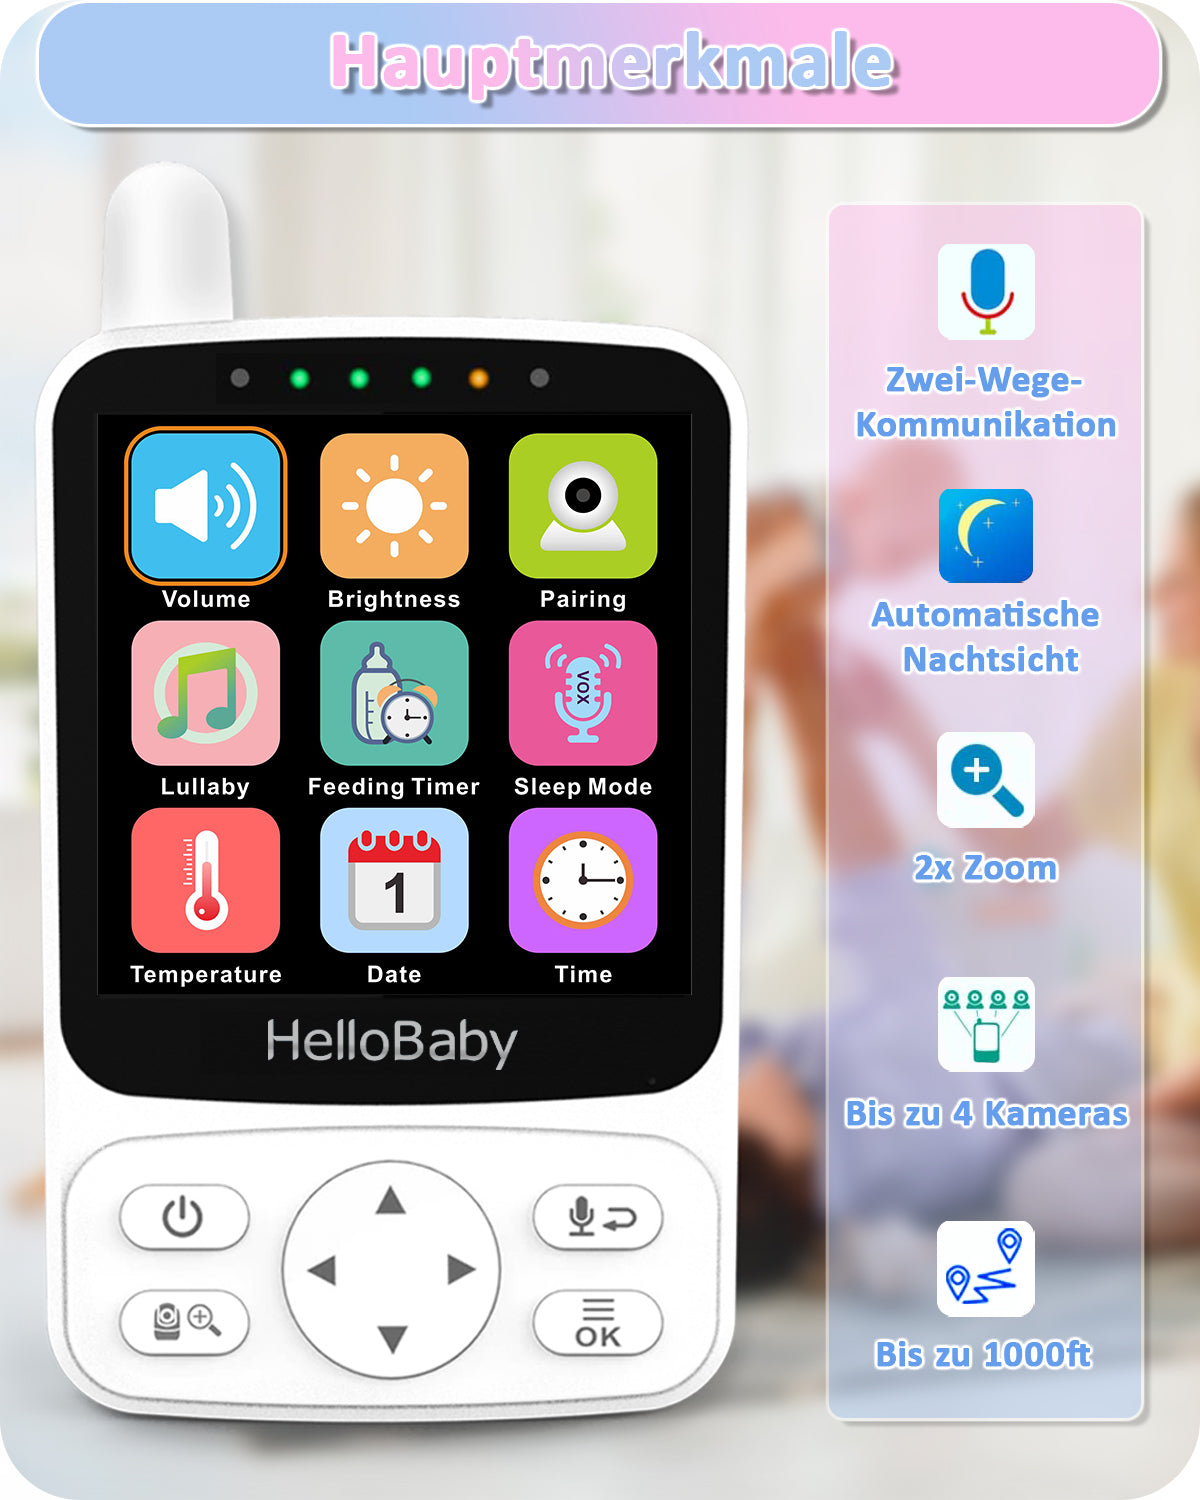 4.3 HD Video Baby Monitor BM02-Long Battery